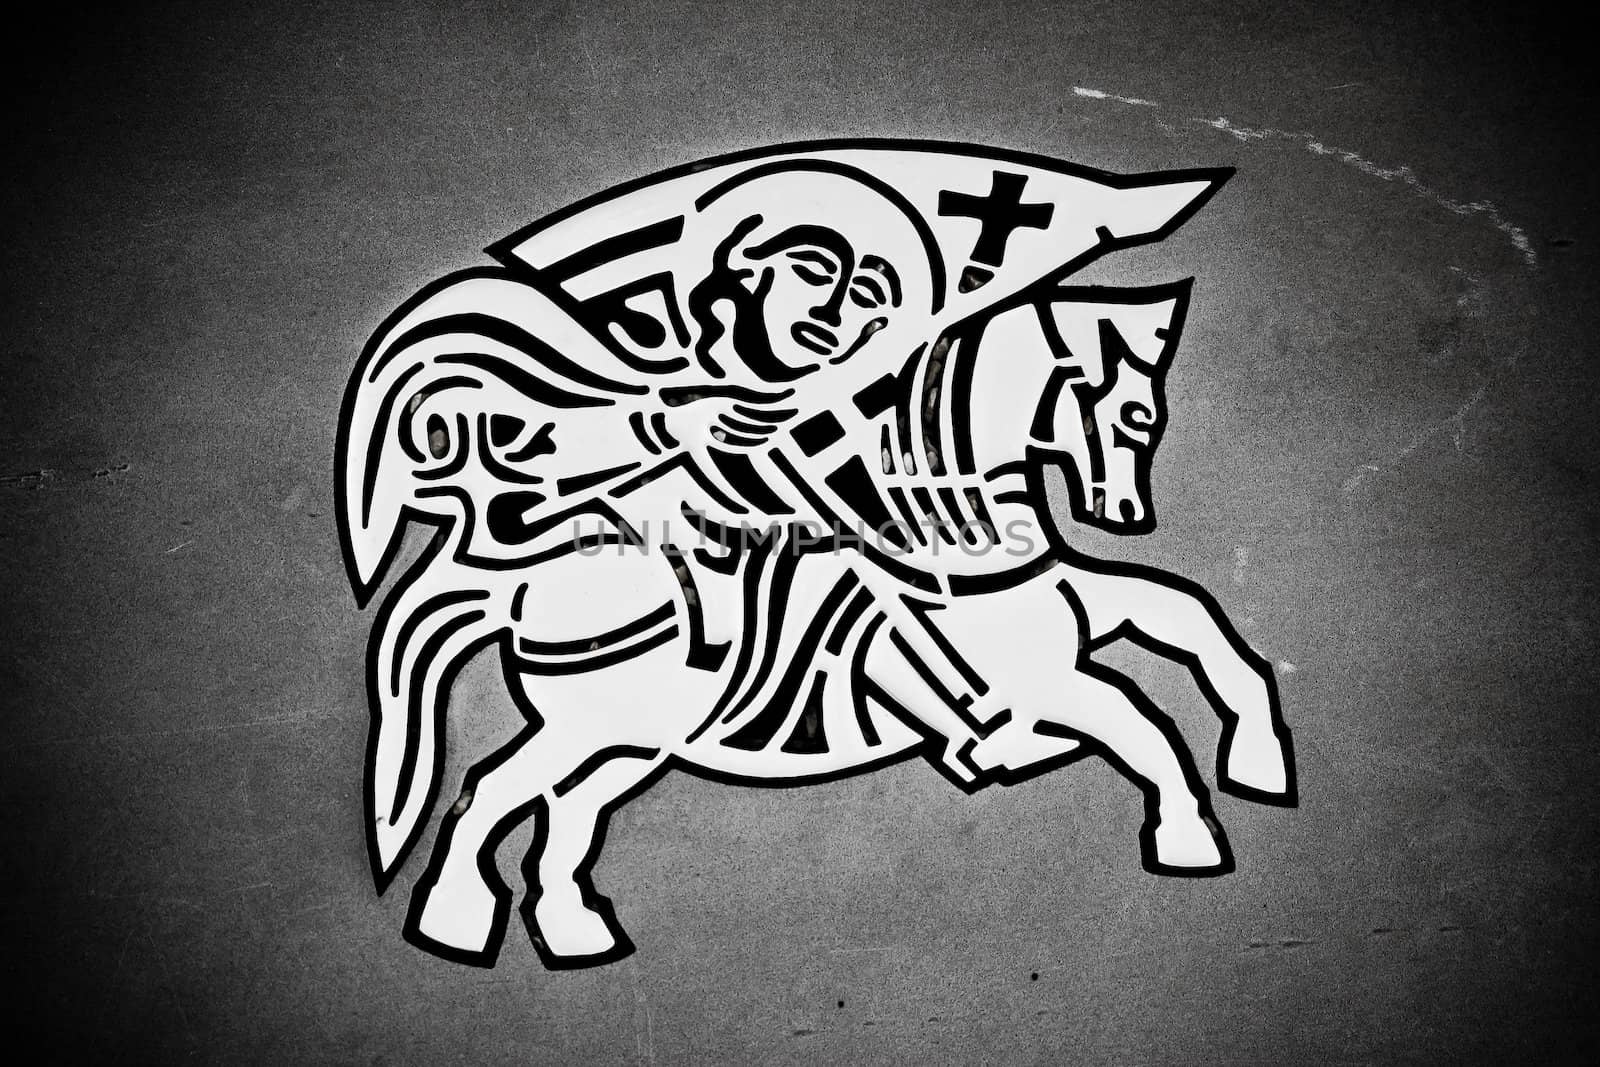 Knight on the horse - Zadar city seal street symbol